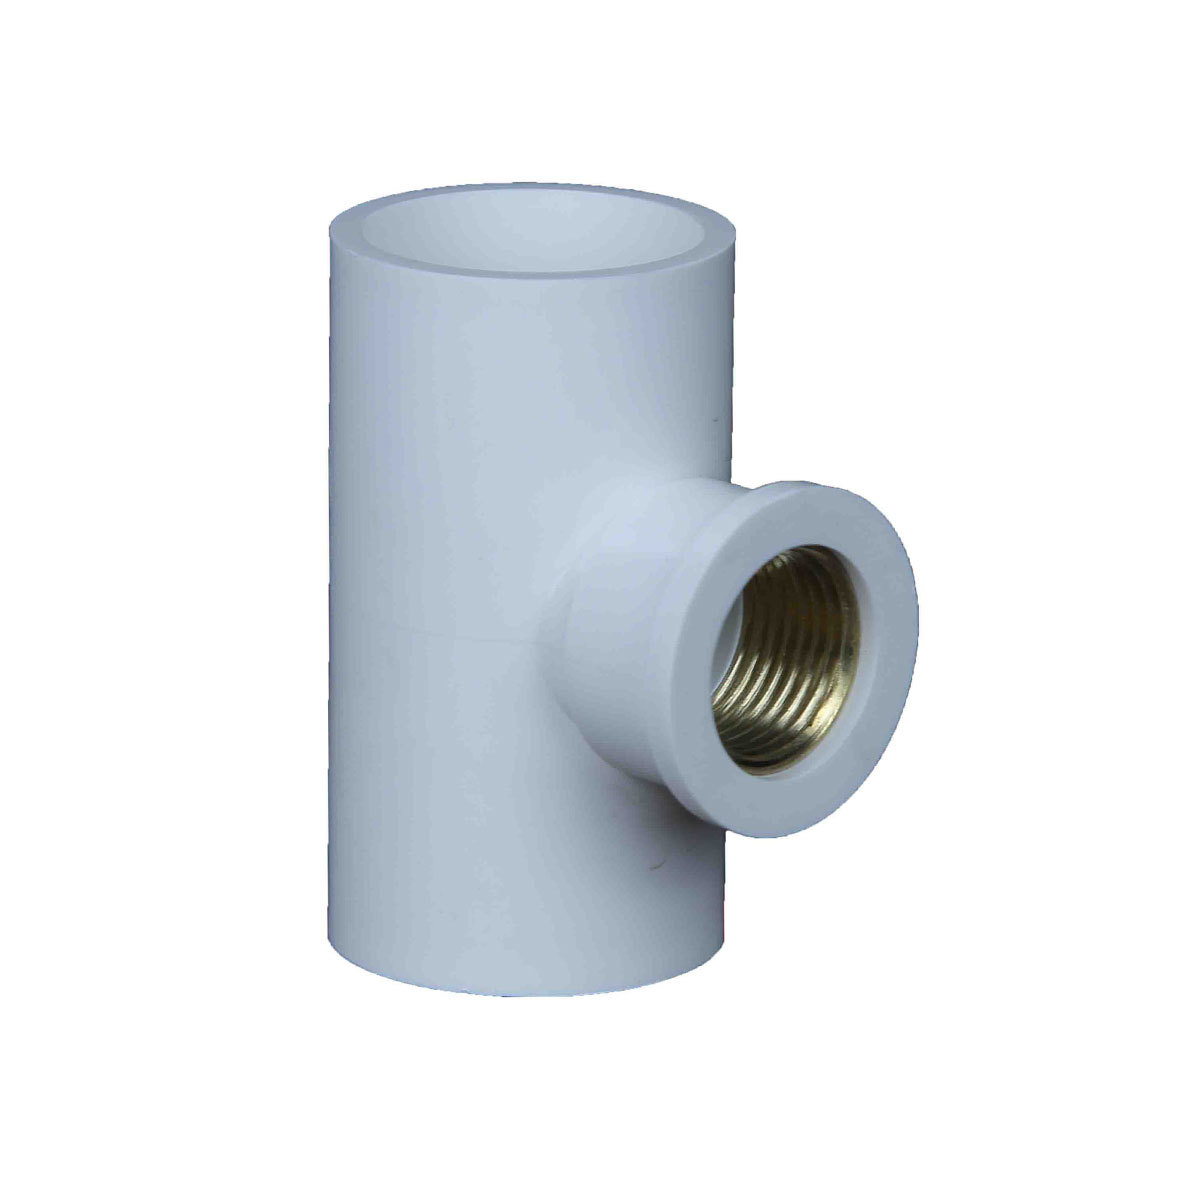 PVC water supply - internal thread tee